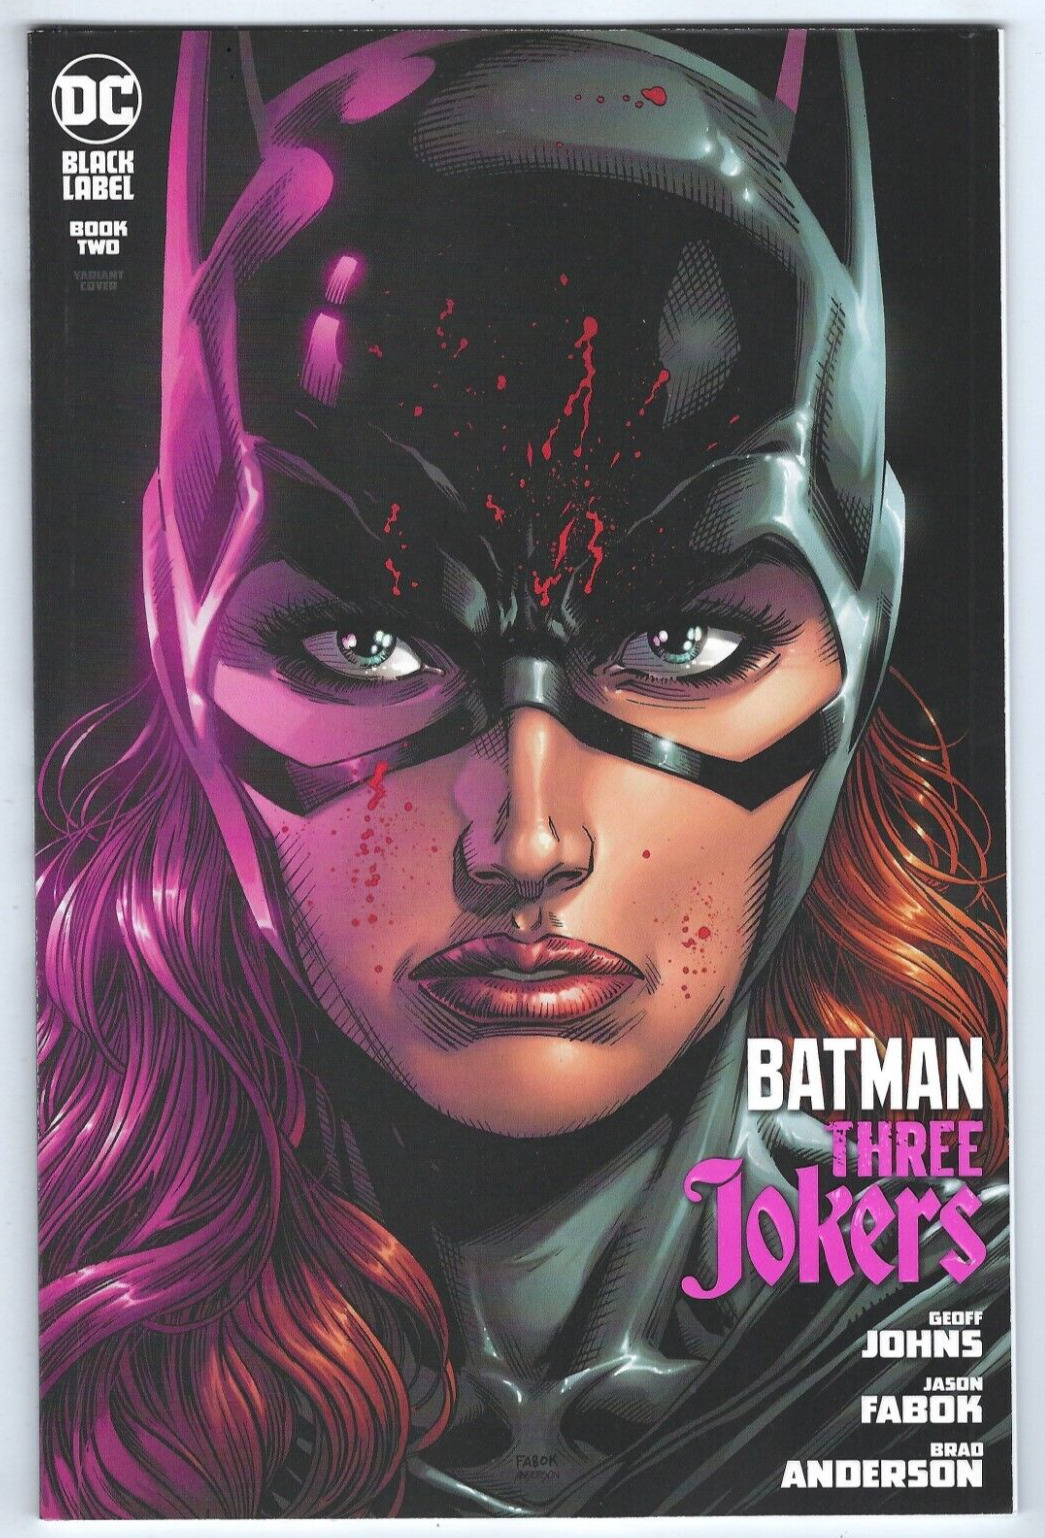 DC Comics BATMAN THREE JOKERS #2 first printing Batgirl variant Cover B